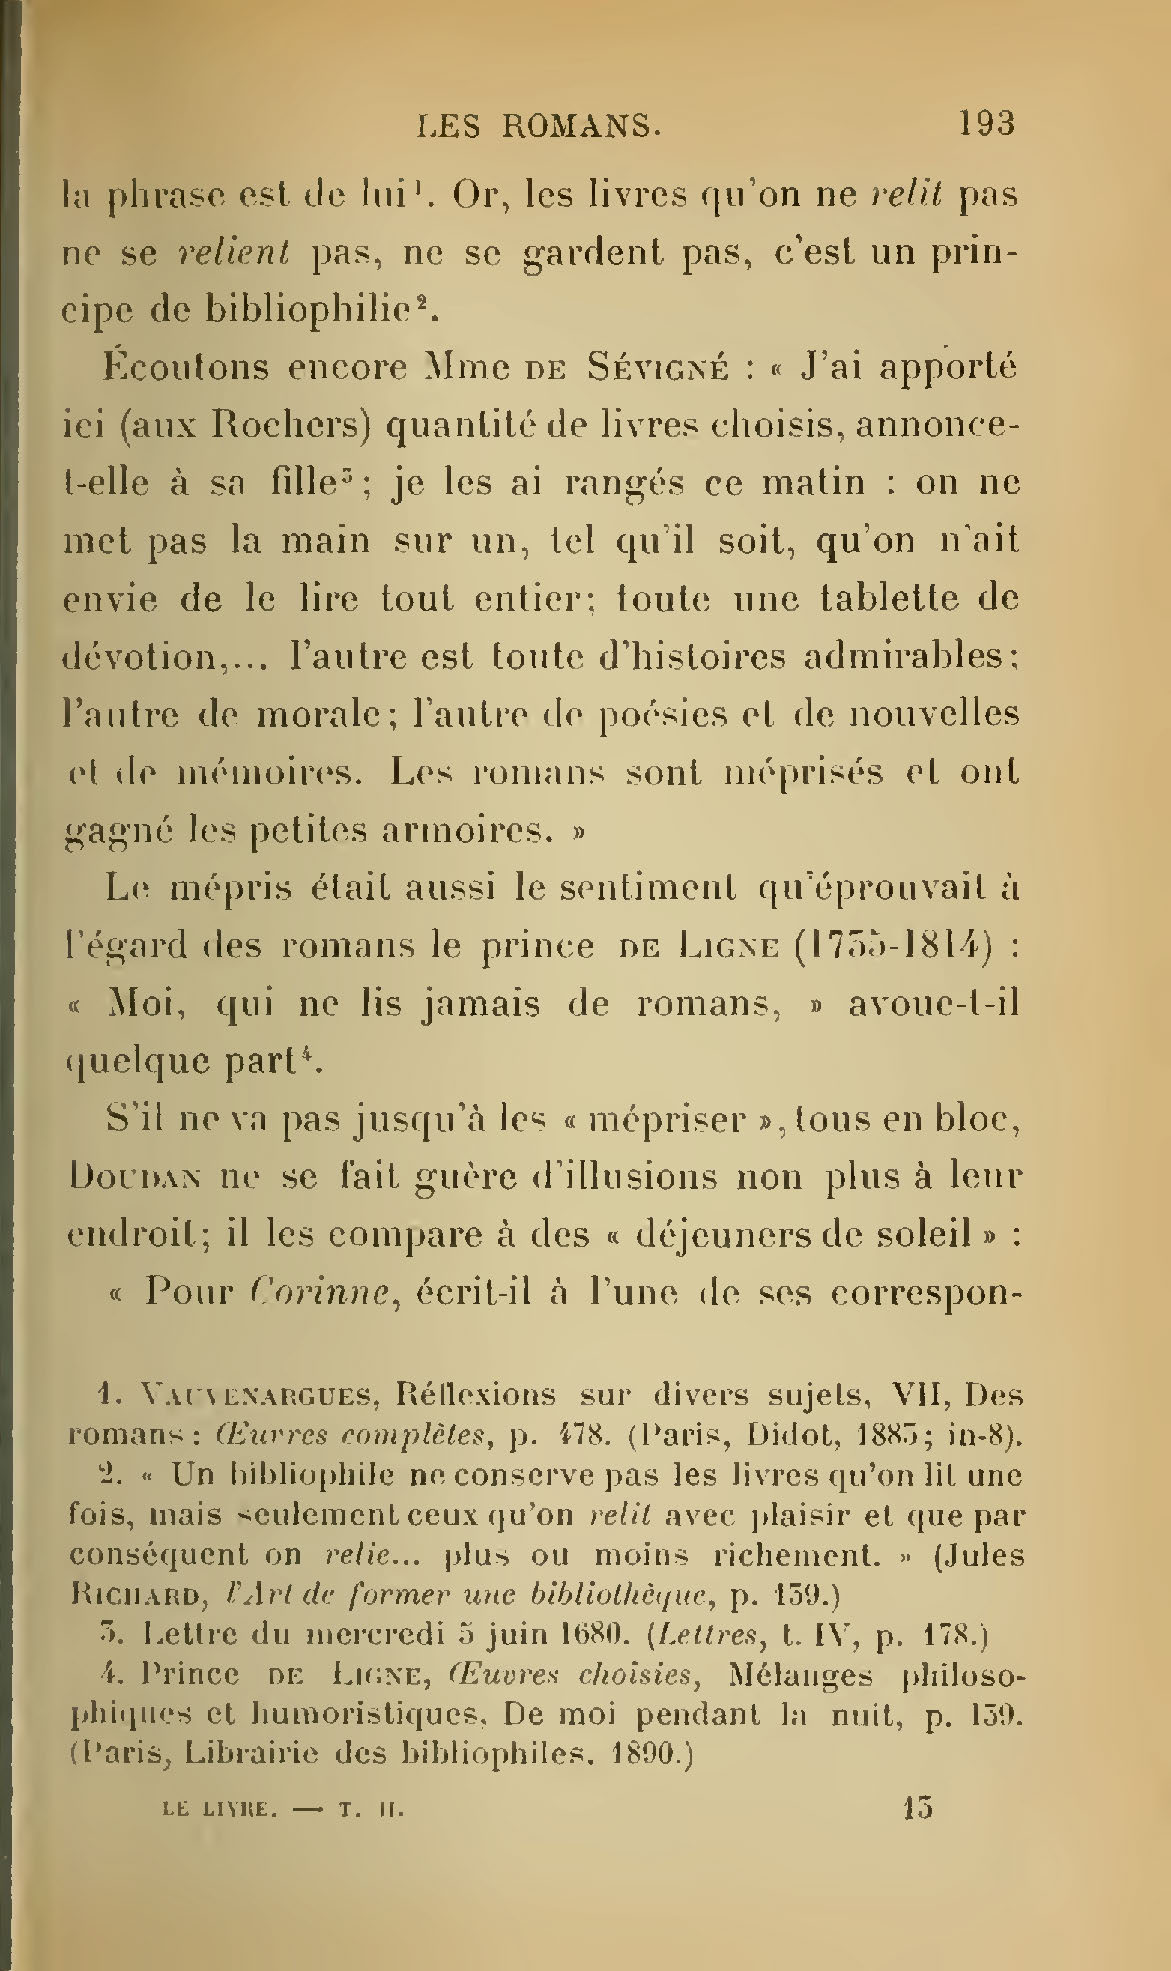 Albert Cim, Le Livre, t. II, p. 193.